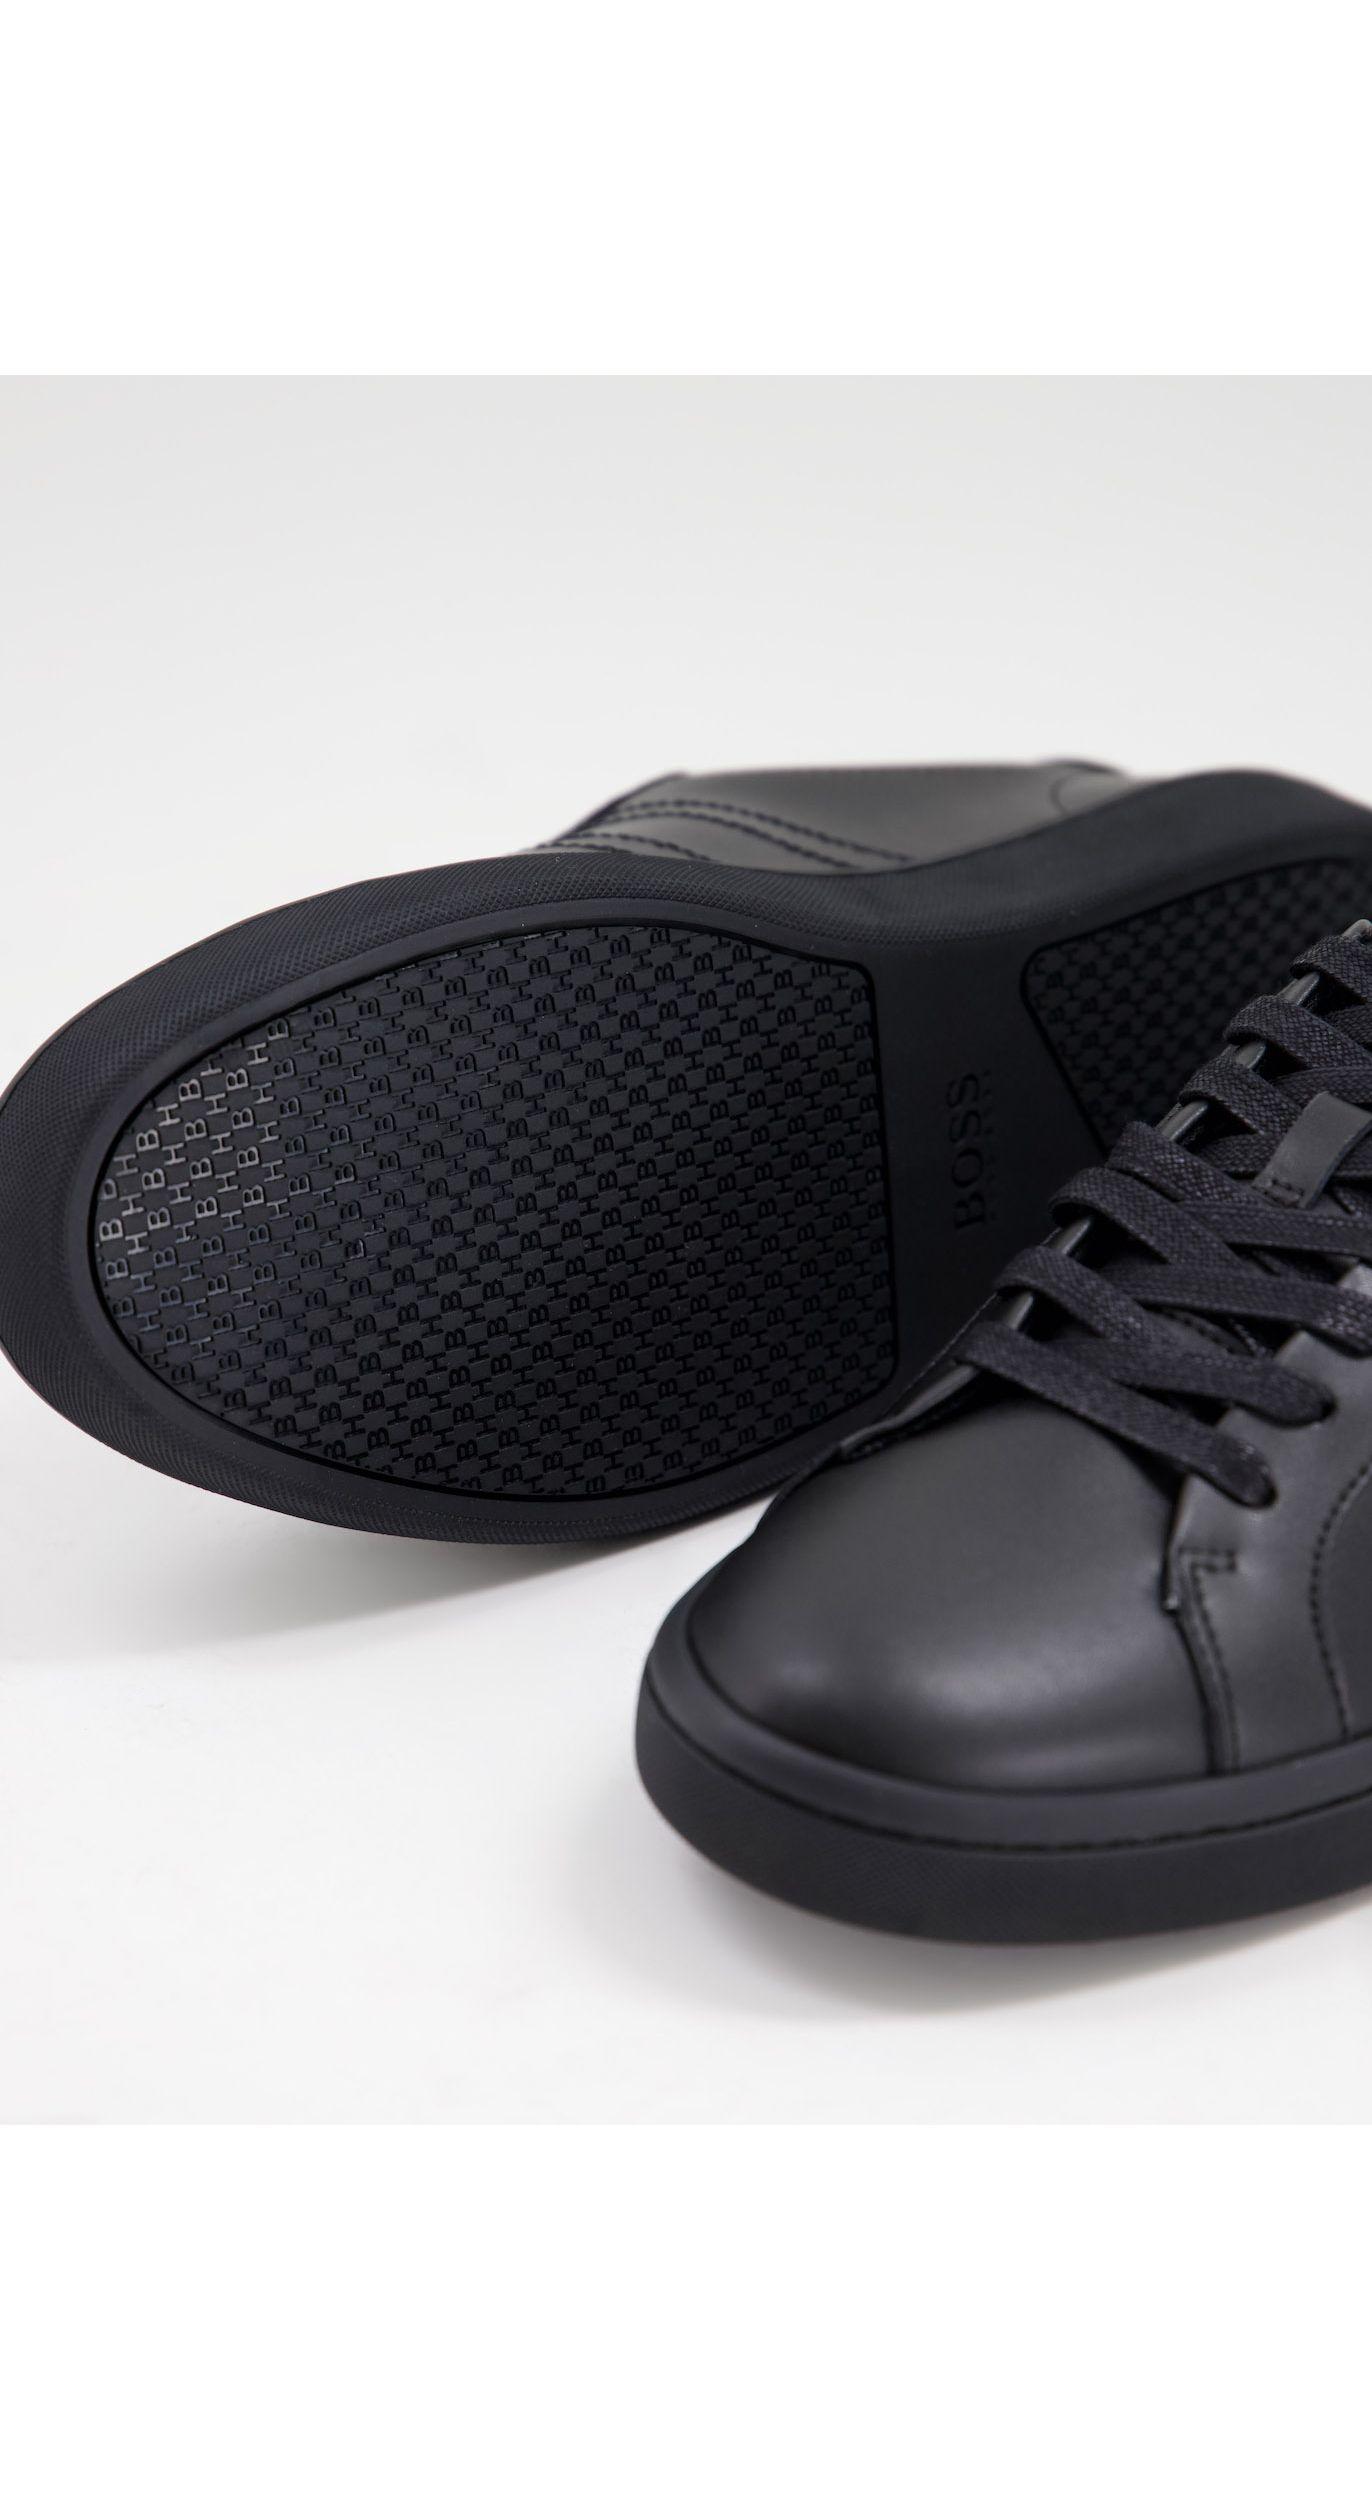 BOSS by HUGO BOSS Ribeira Tenn Leather Trainers in Black for Men | Lyst